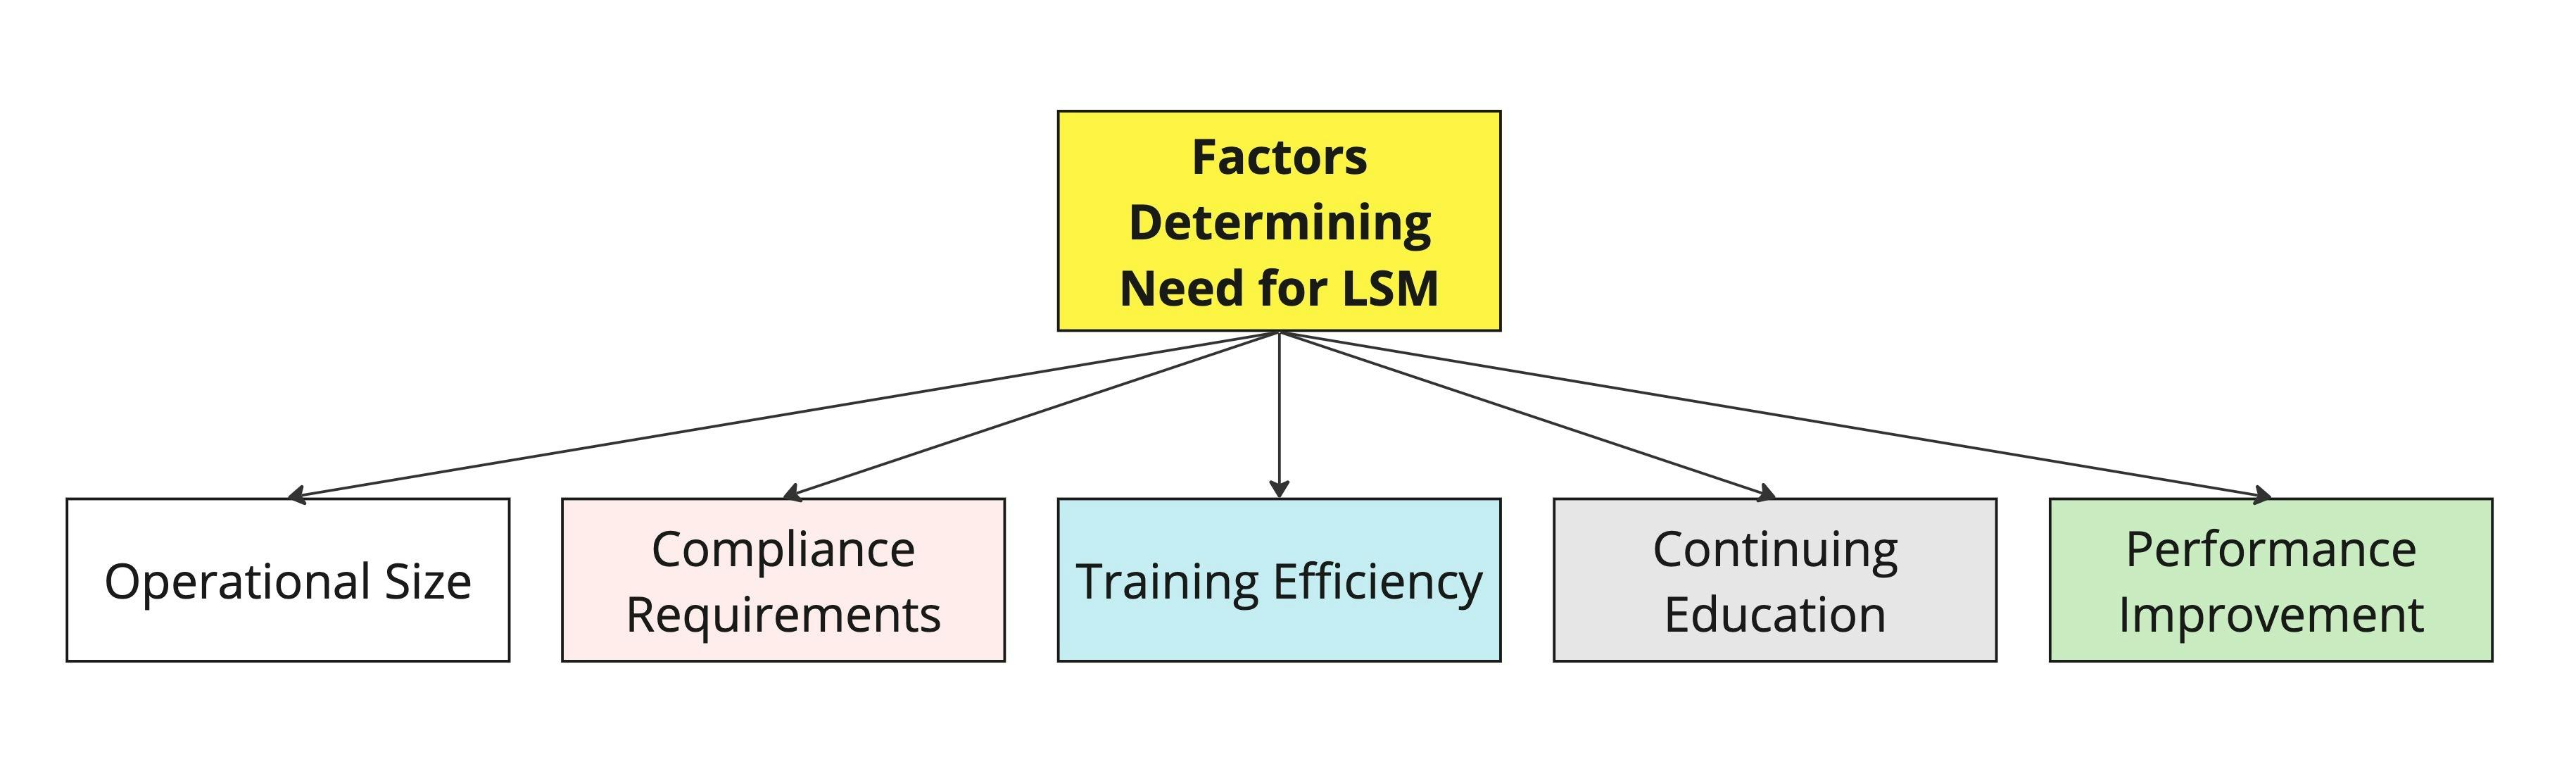 Factors determining need for LSM